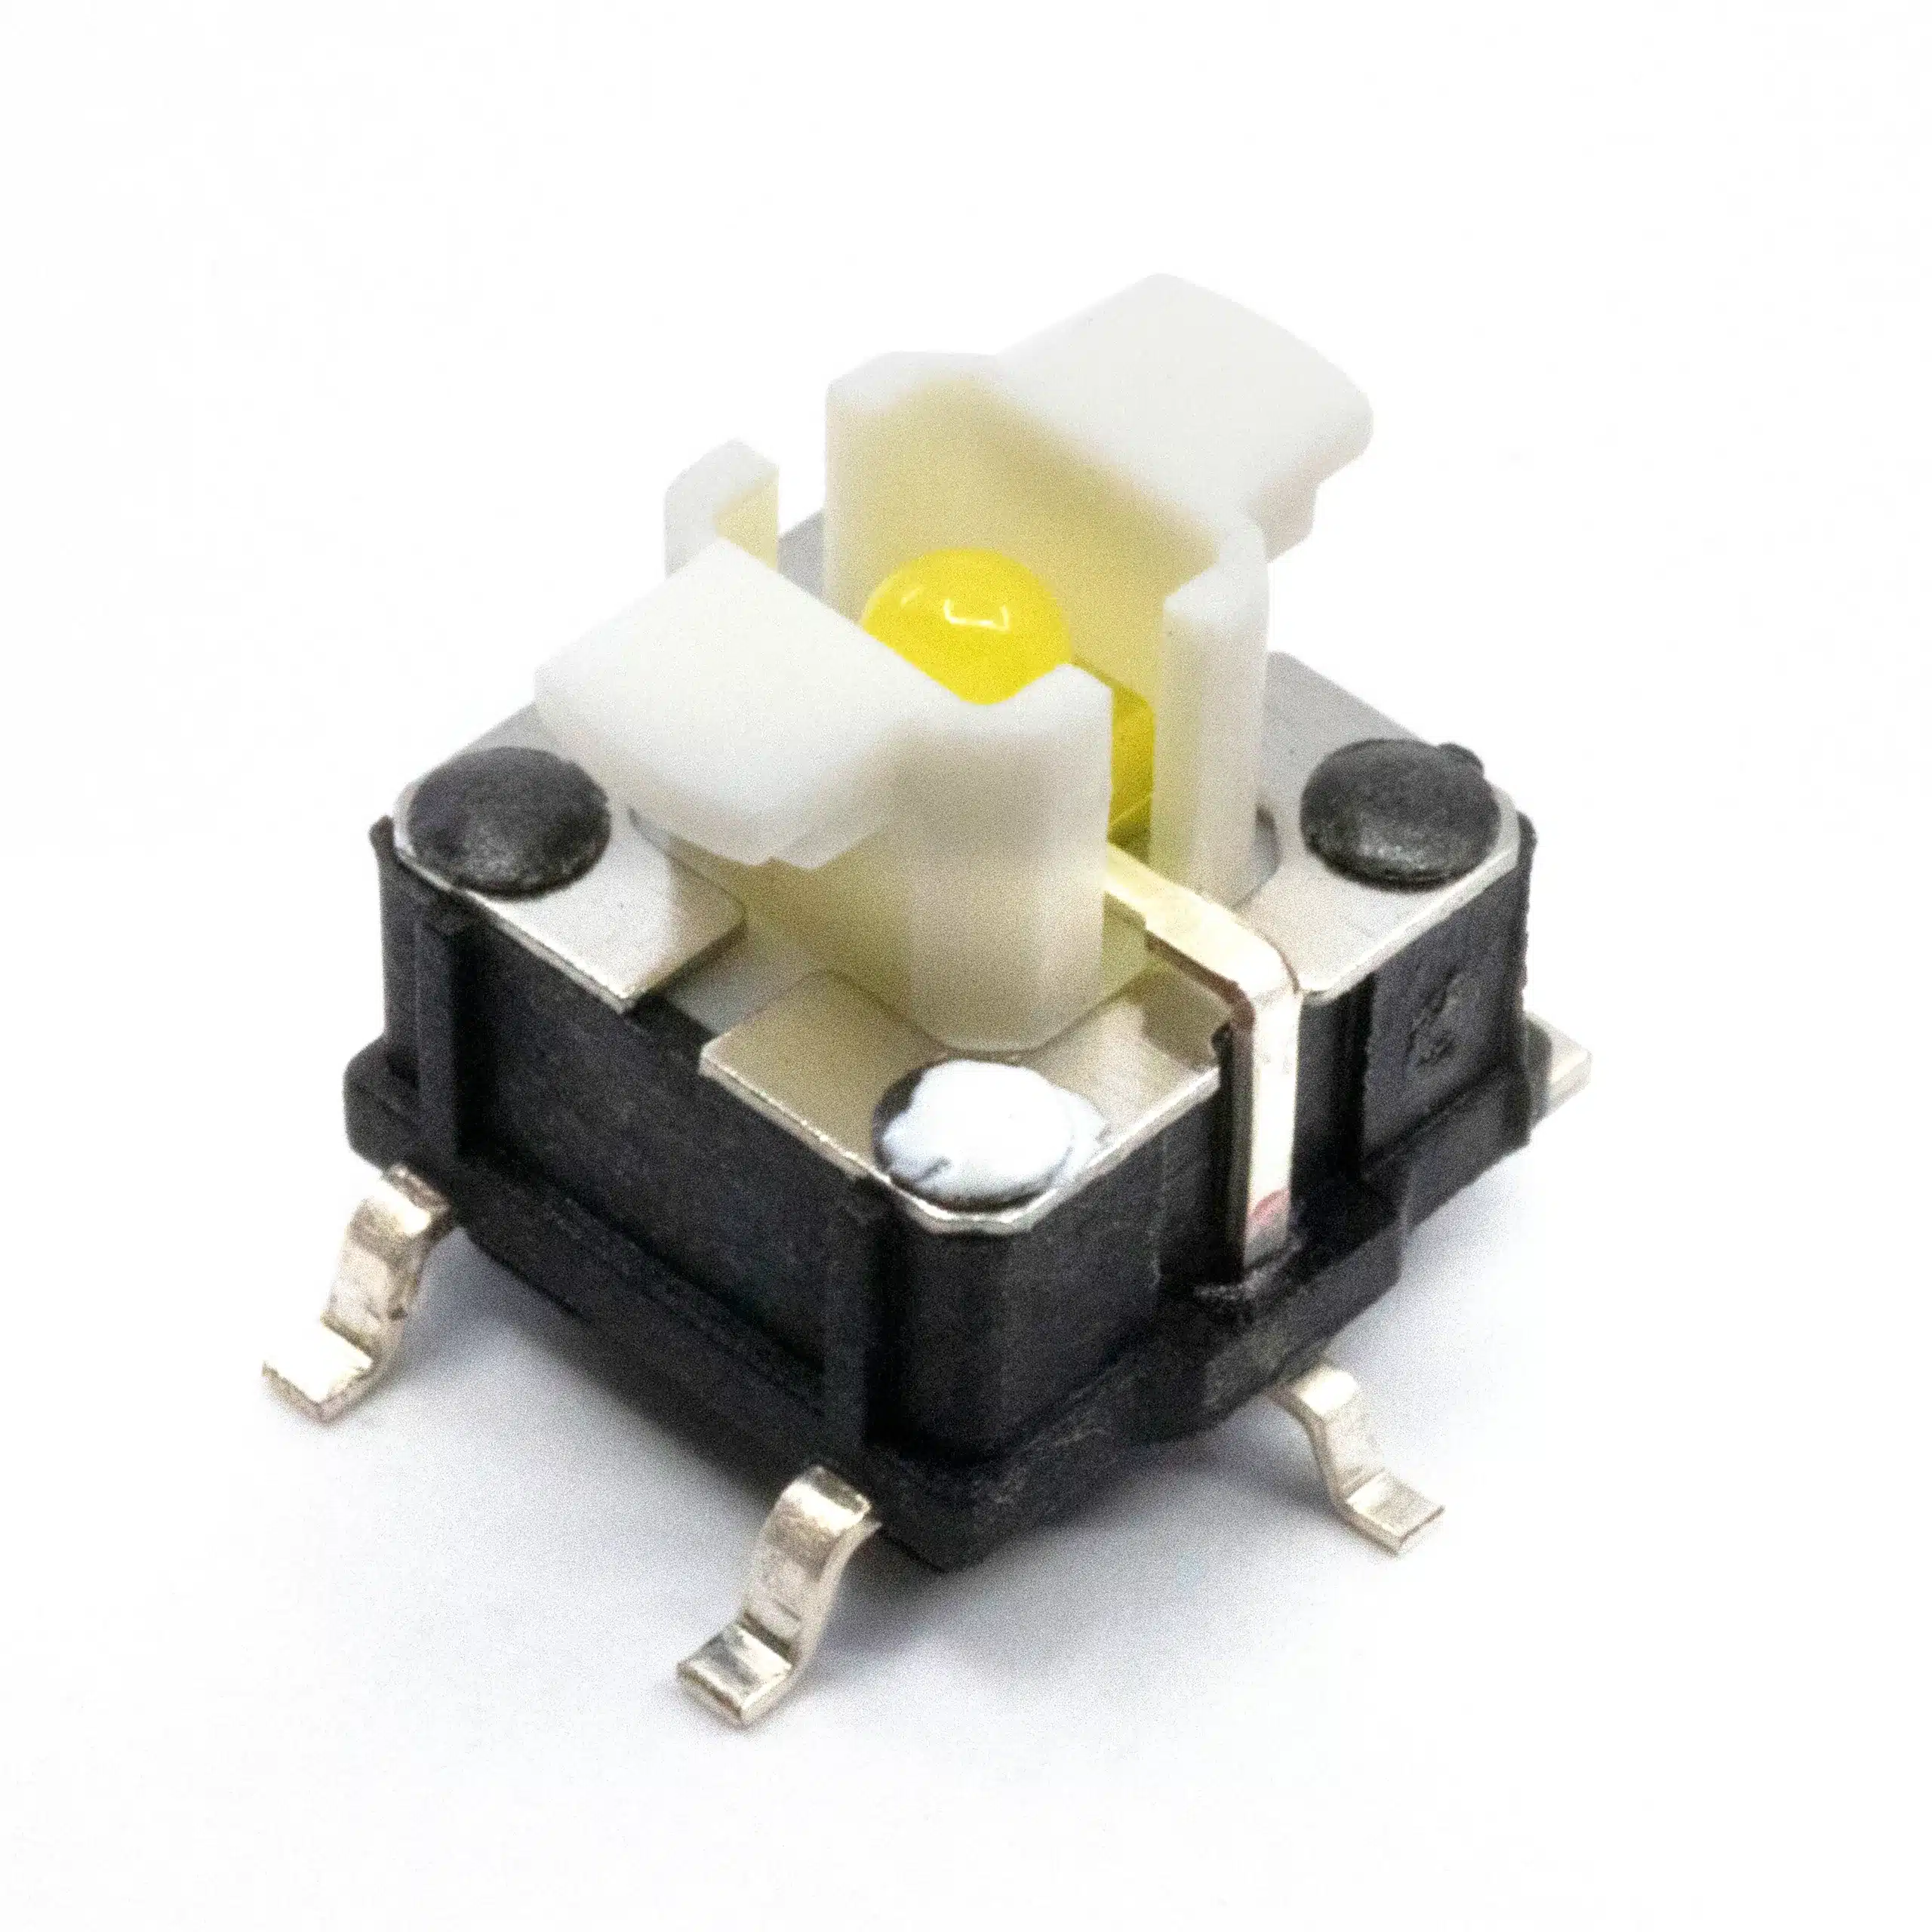 TL3265 Series LED Illuminated, SMT Tactile Switch